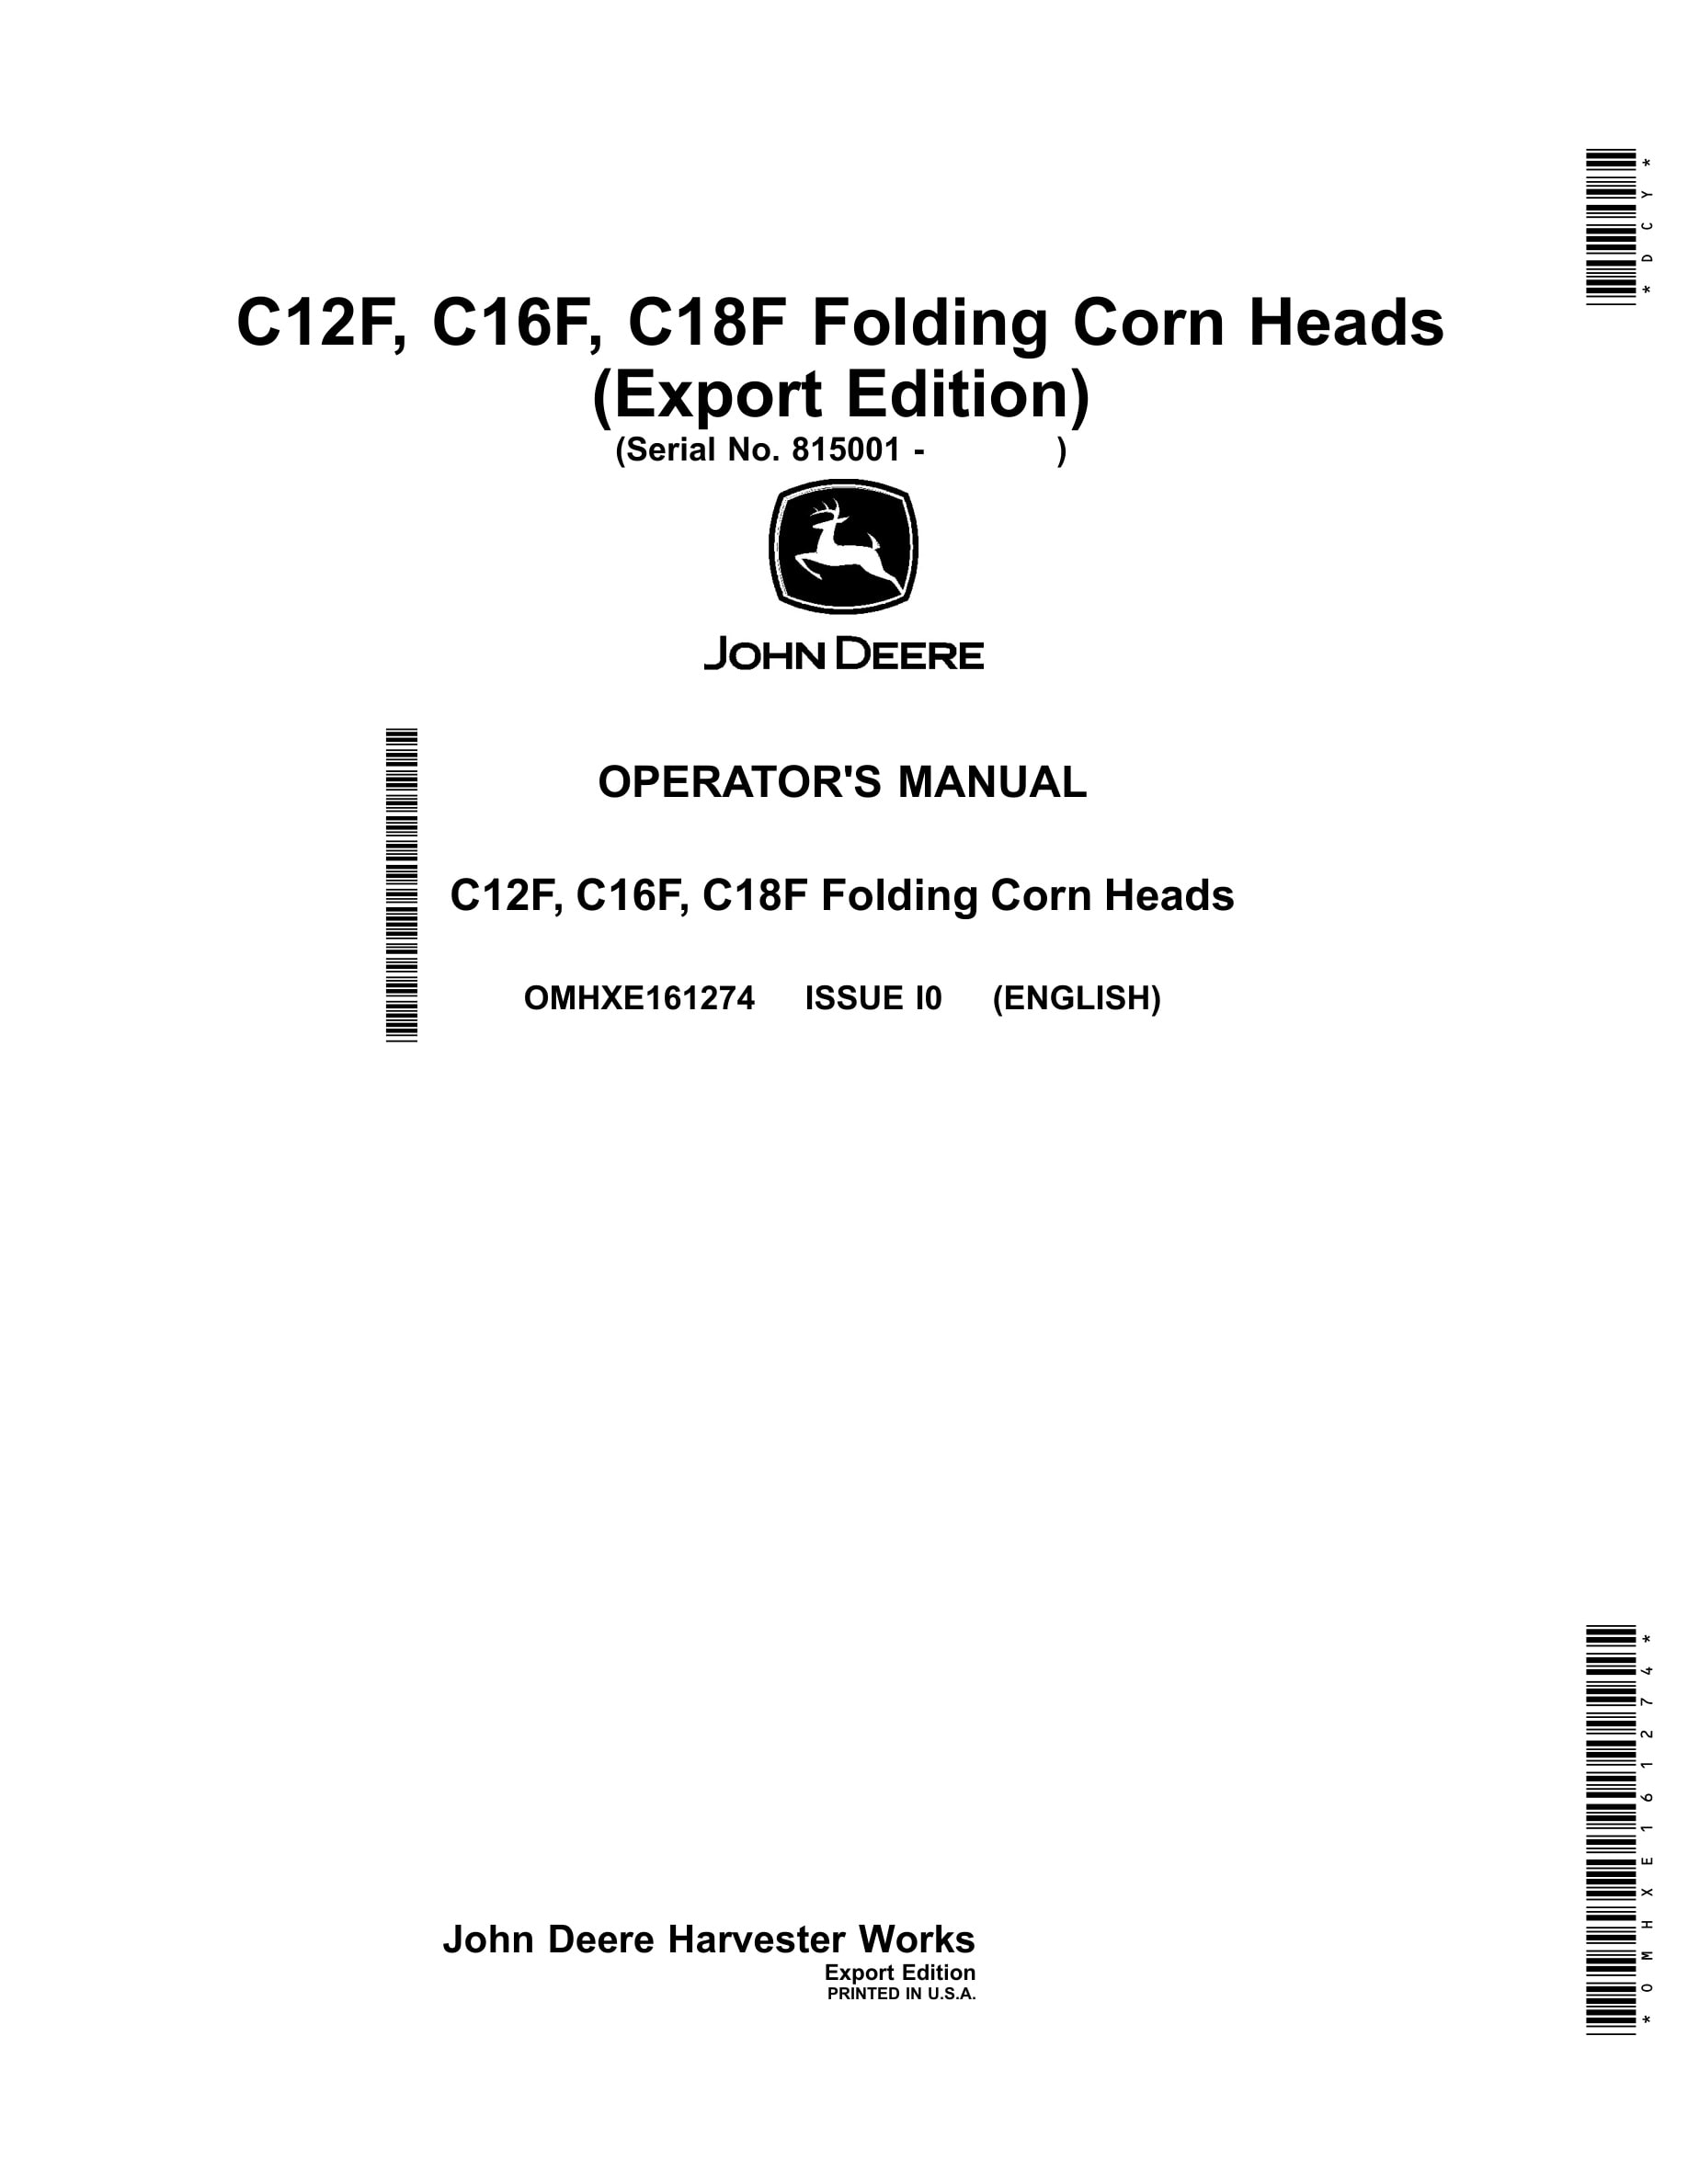 John Deere C12F, C16F, C18F Folding Corn Heads Operator Manual OMHXE161274-1